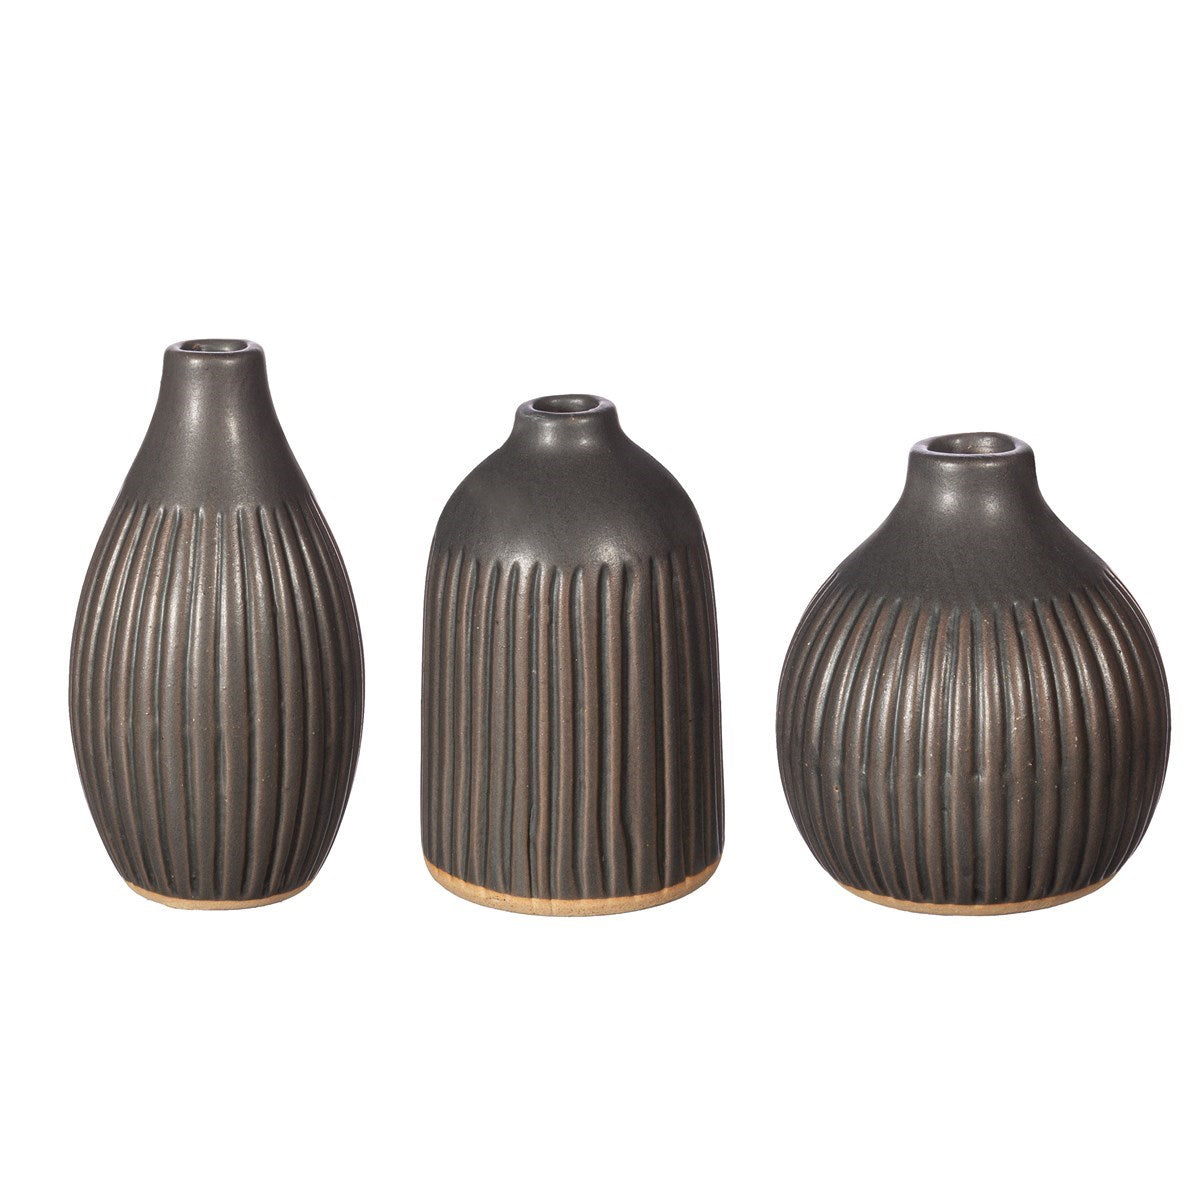 Grooved Bud Vases - Set of 3 - Dark